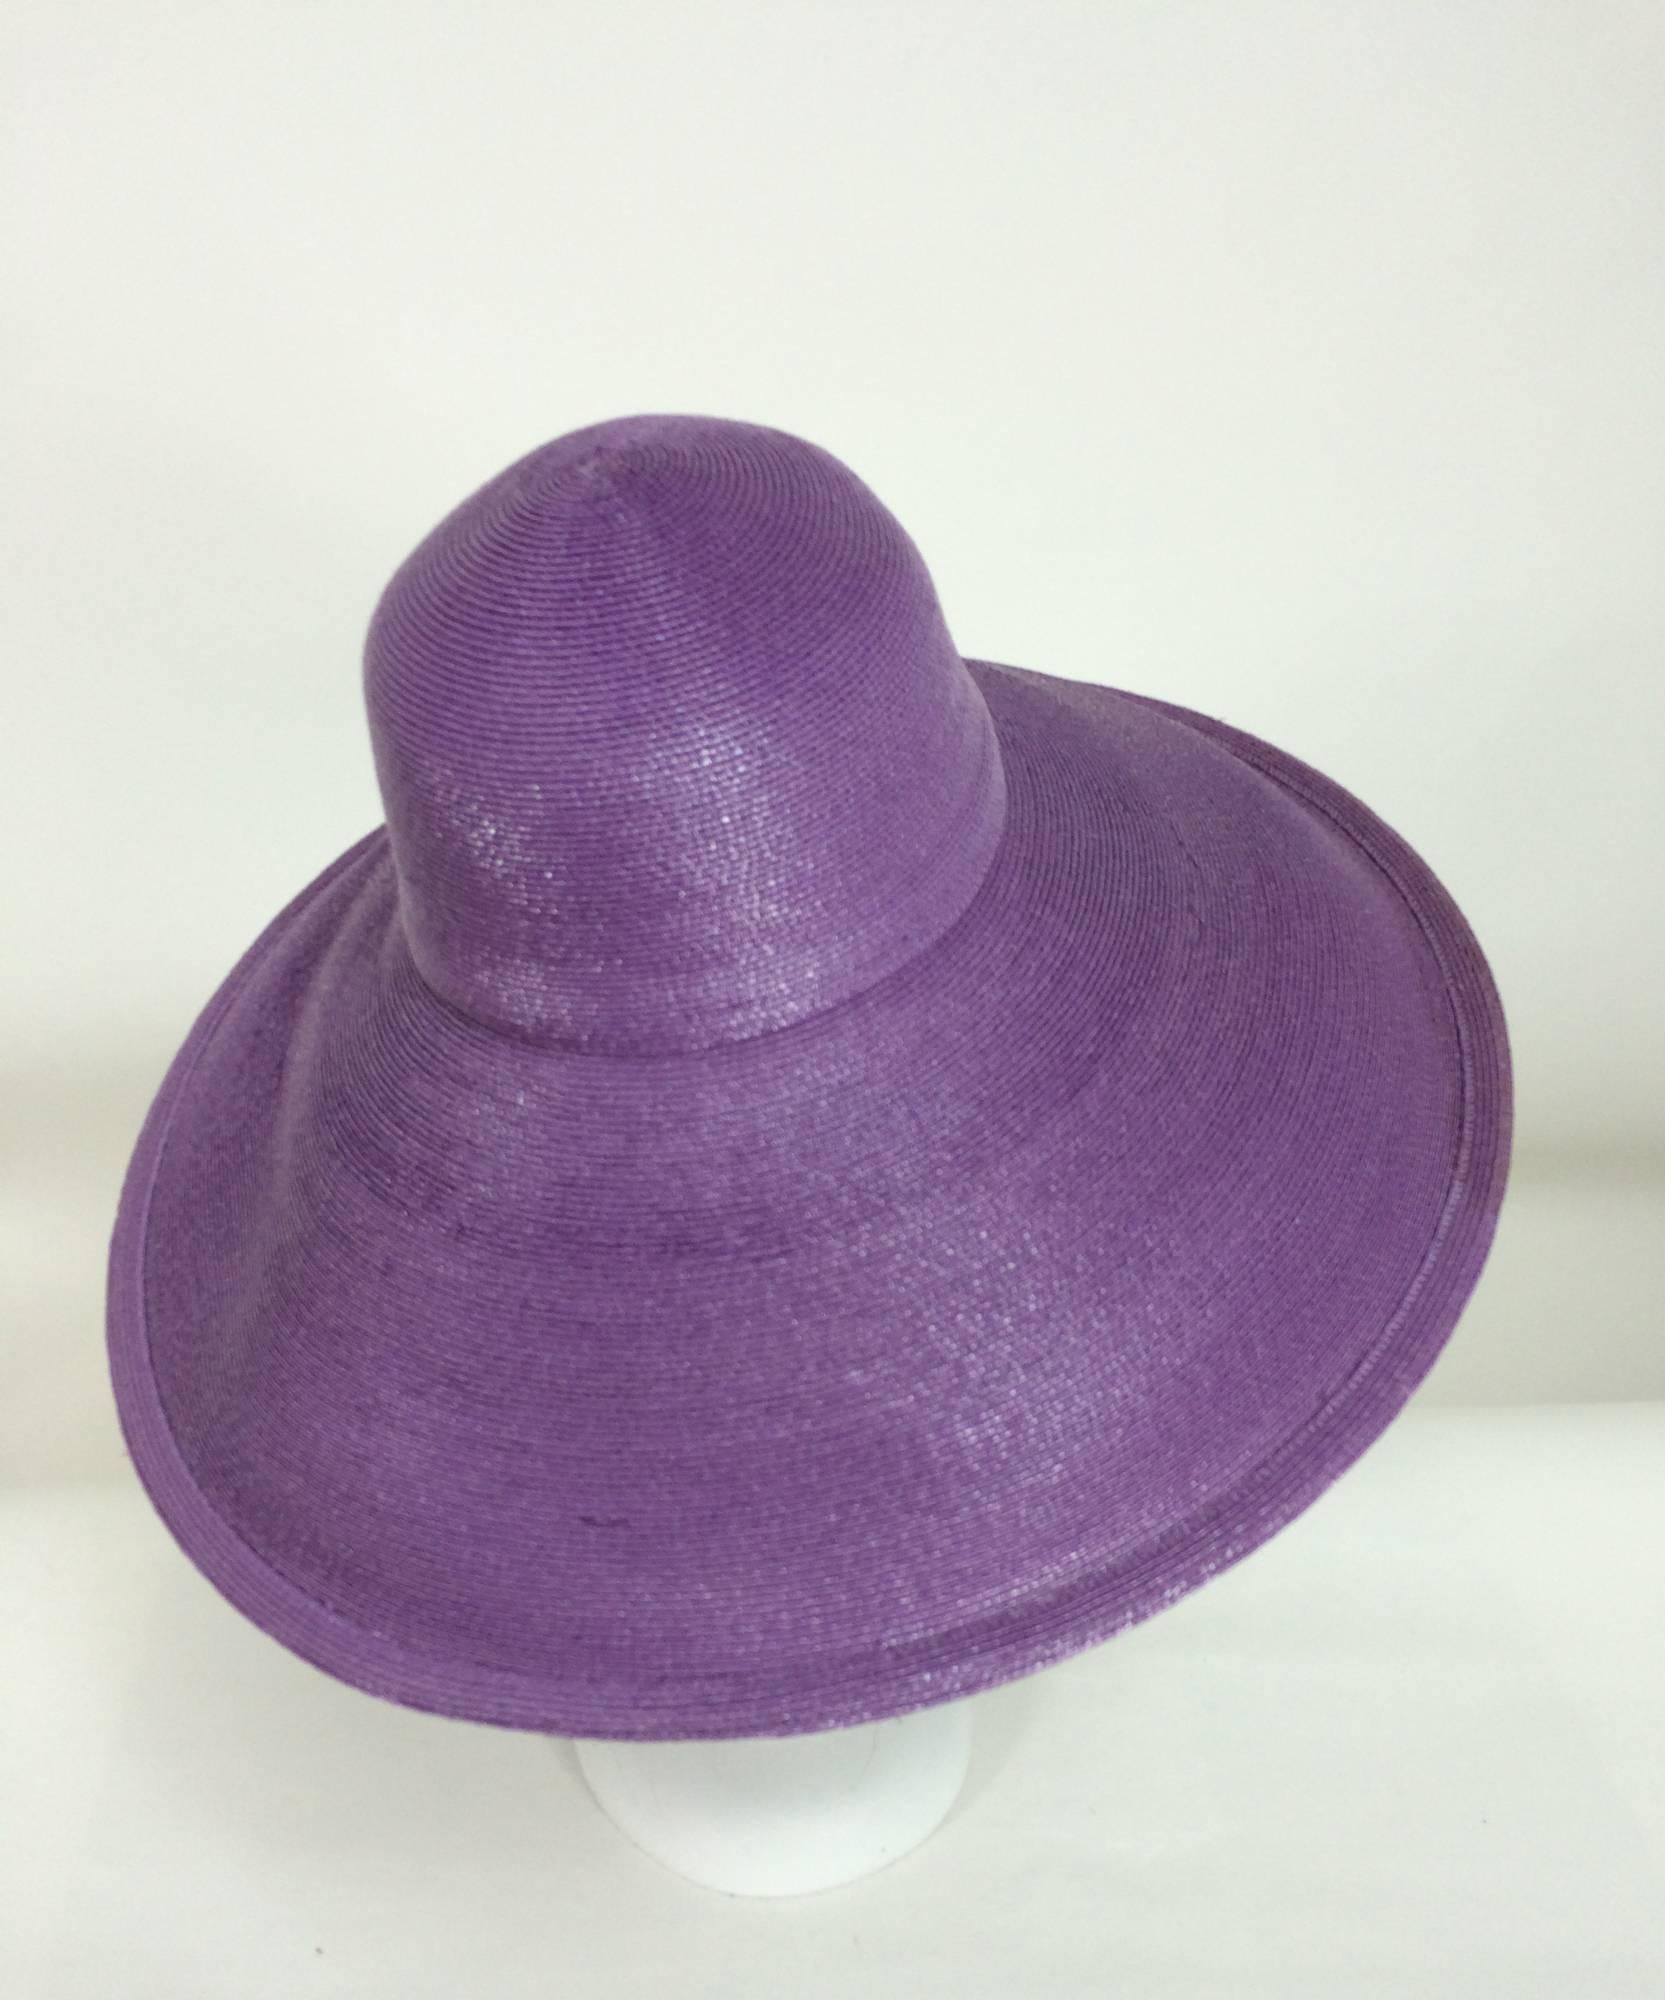  Vintage Galanos purple glazed straw wide brim hat 1960s unworn...Super wide brim hat has a deep crown, inside gros grain ribbon band...Brim can be worn turned back or down...Fine quality straw...
Measurements:
22